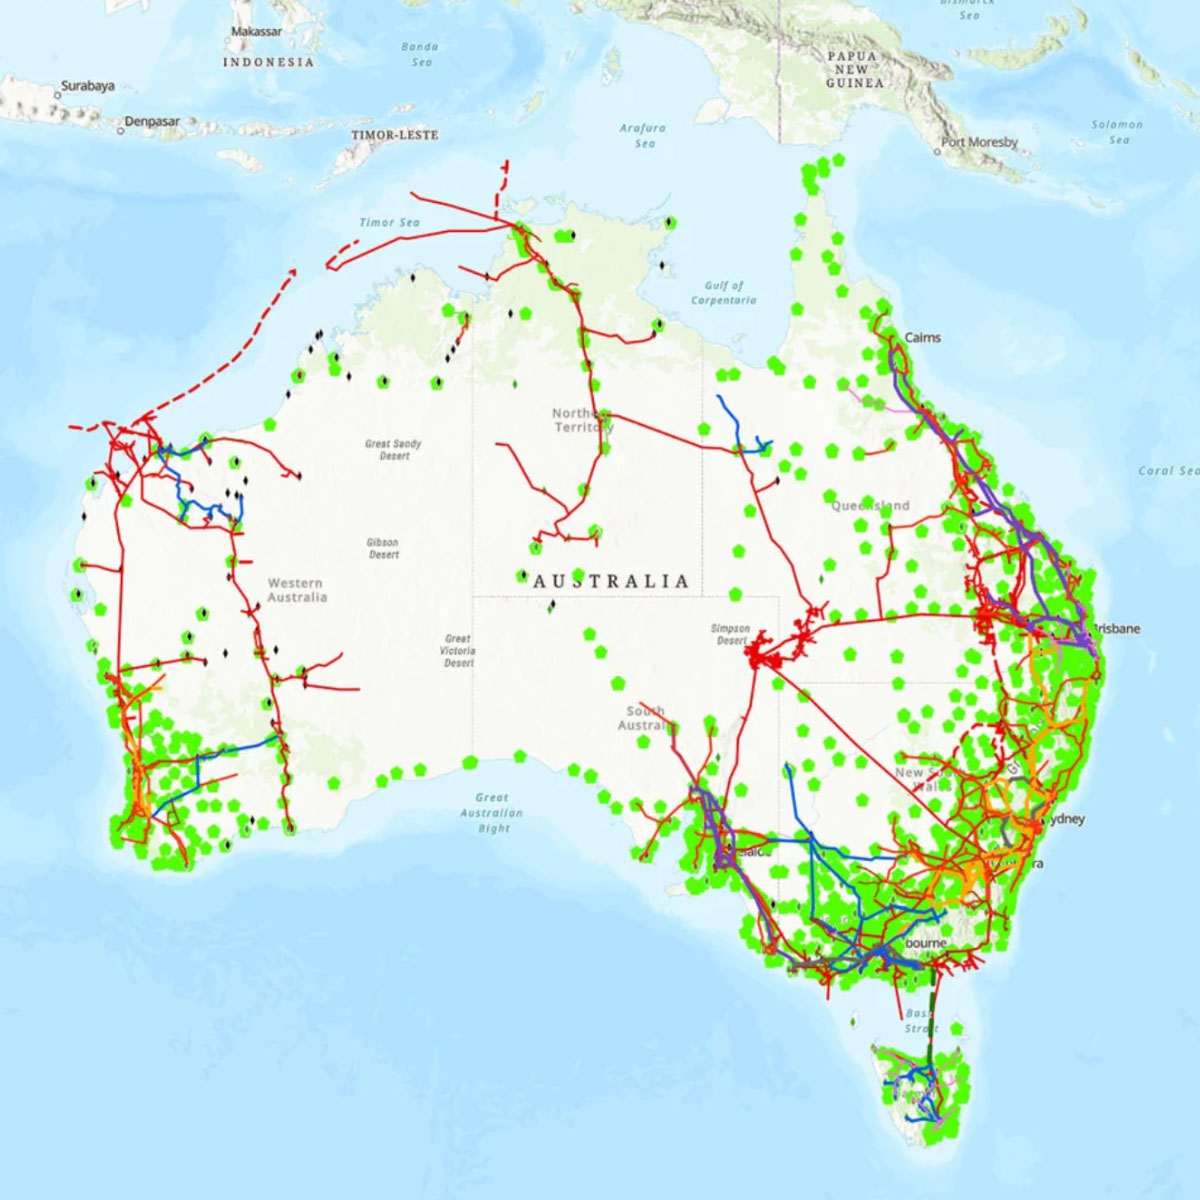 Image of Australia overlaid with data from the National Roads dataset (Digital Atlas of Australia)